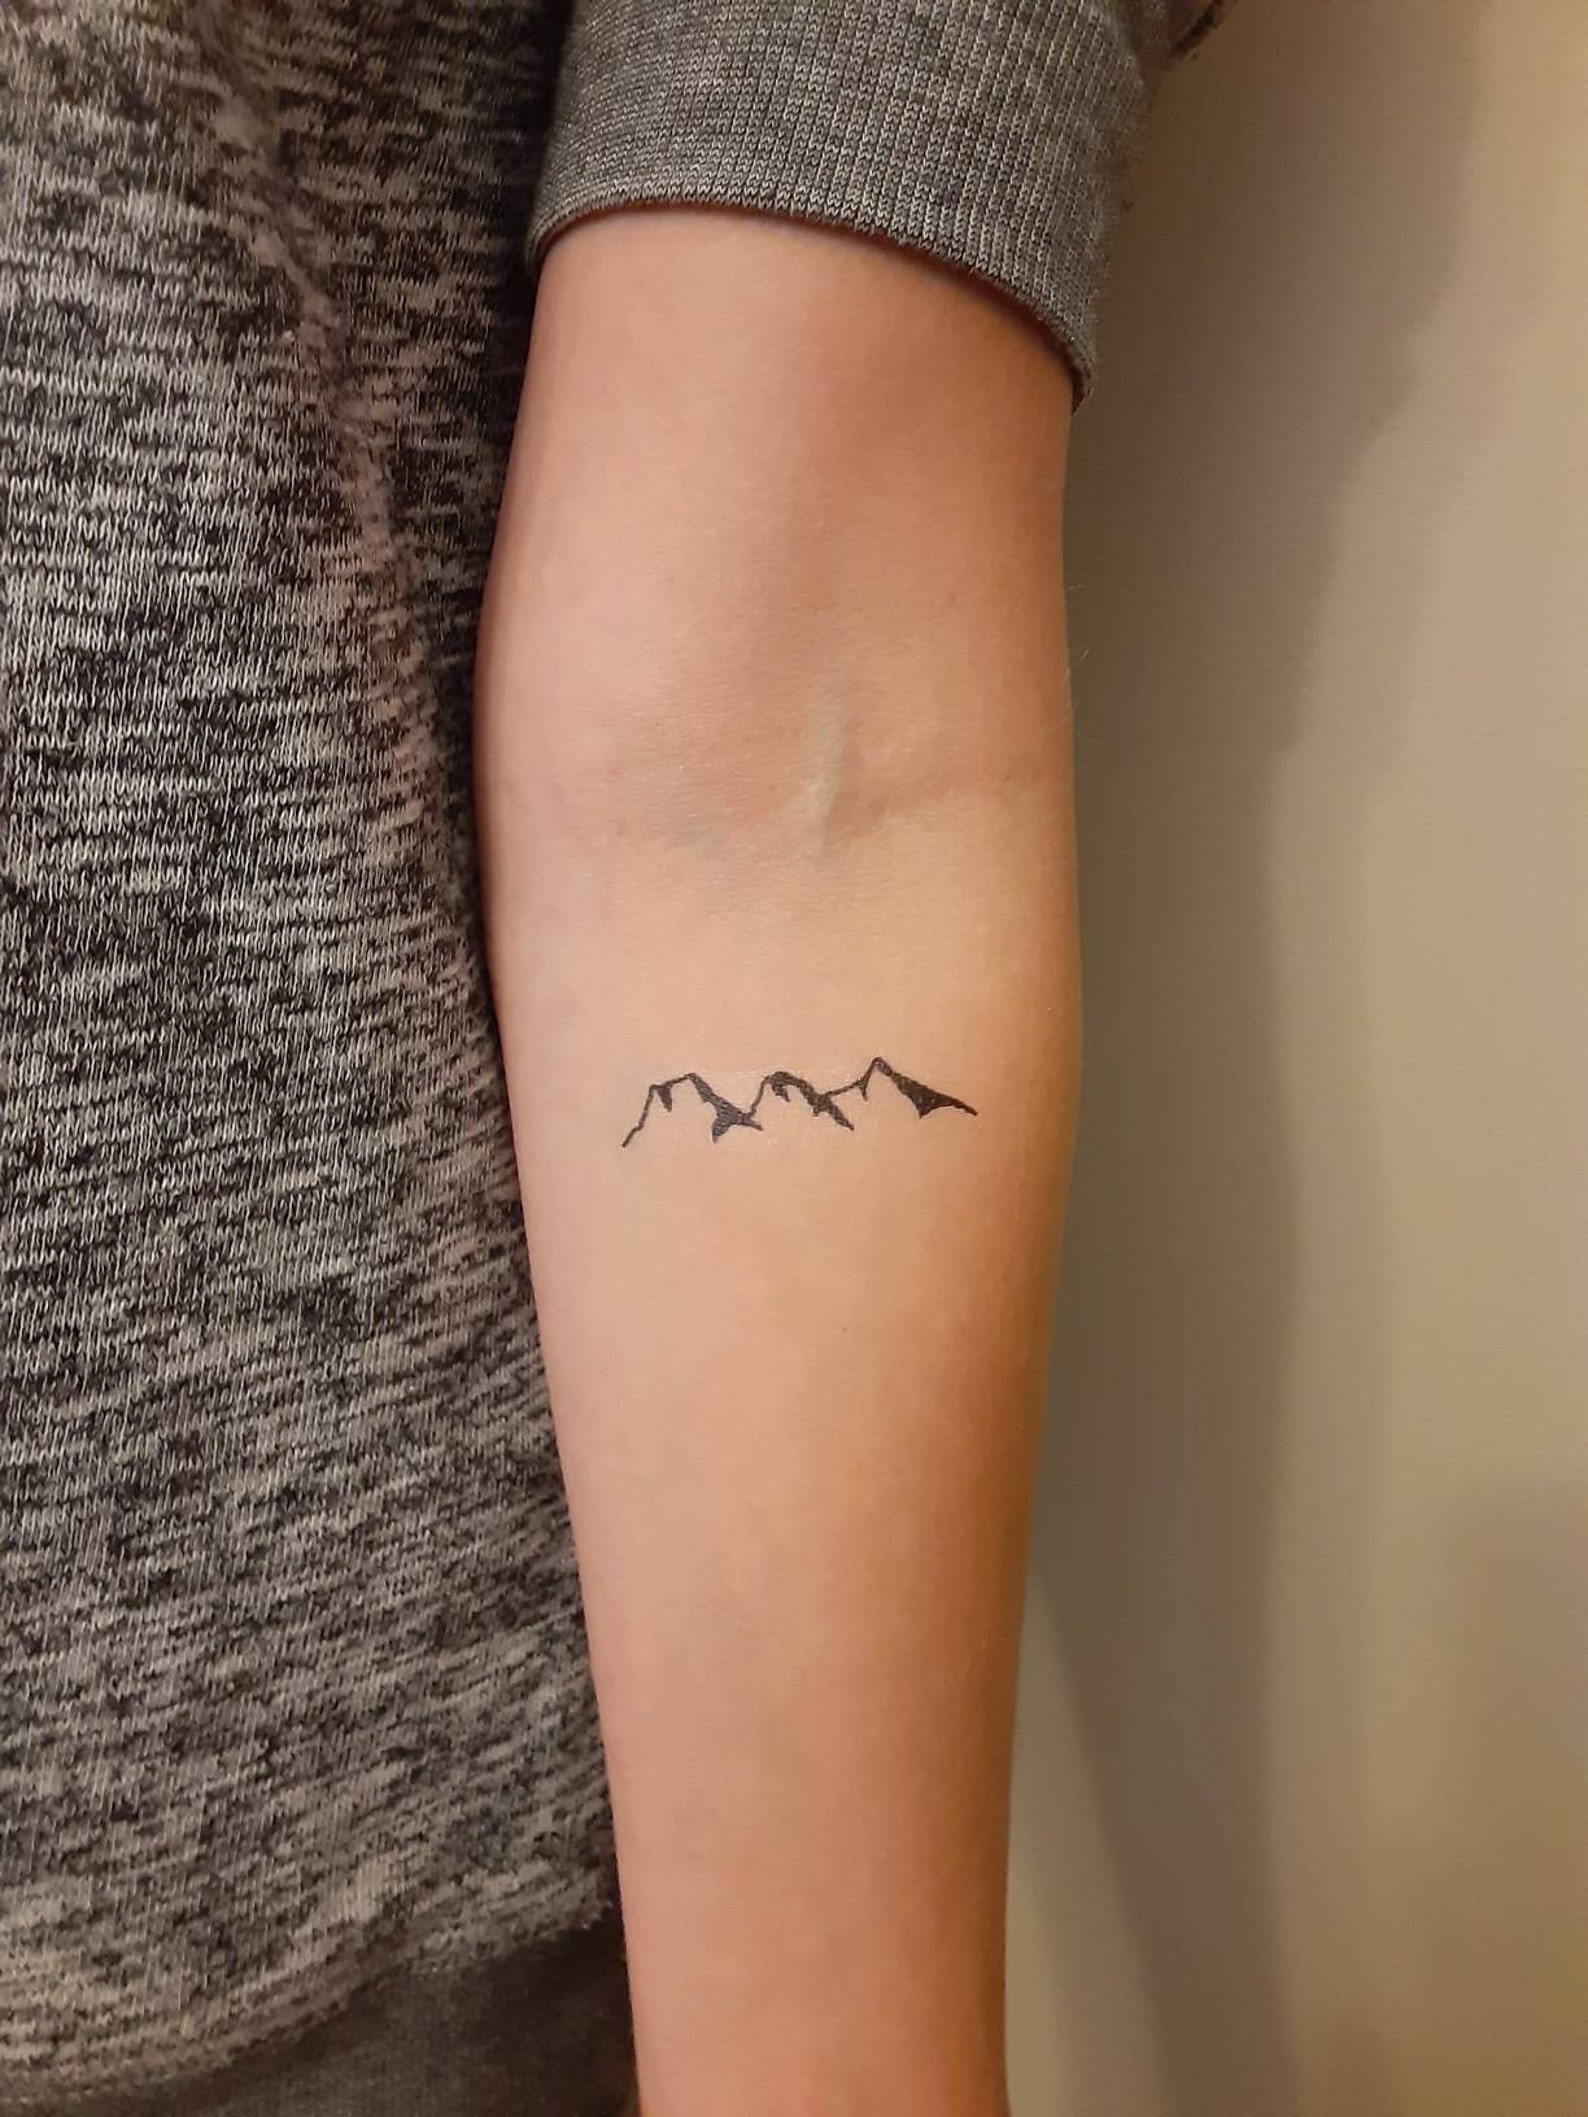 3 Sisters Mountain Tattoo - Etsy Canada